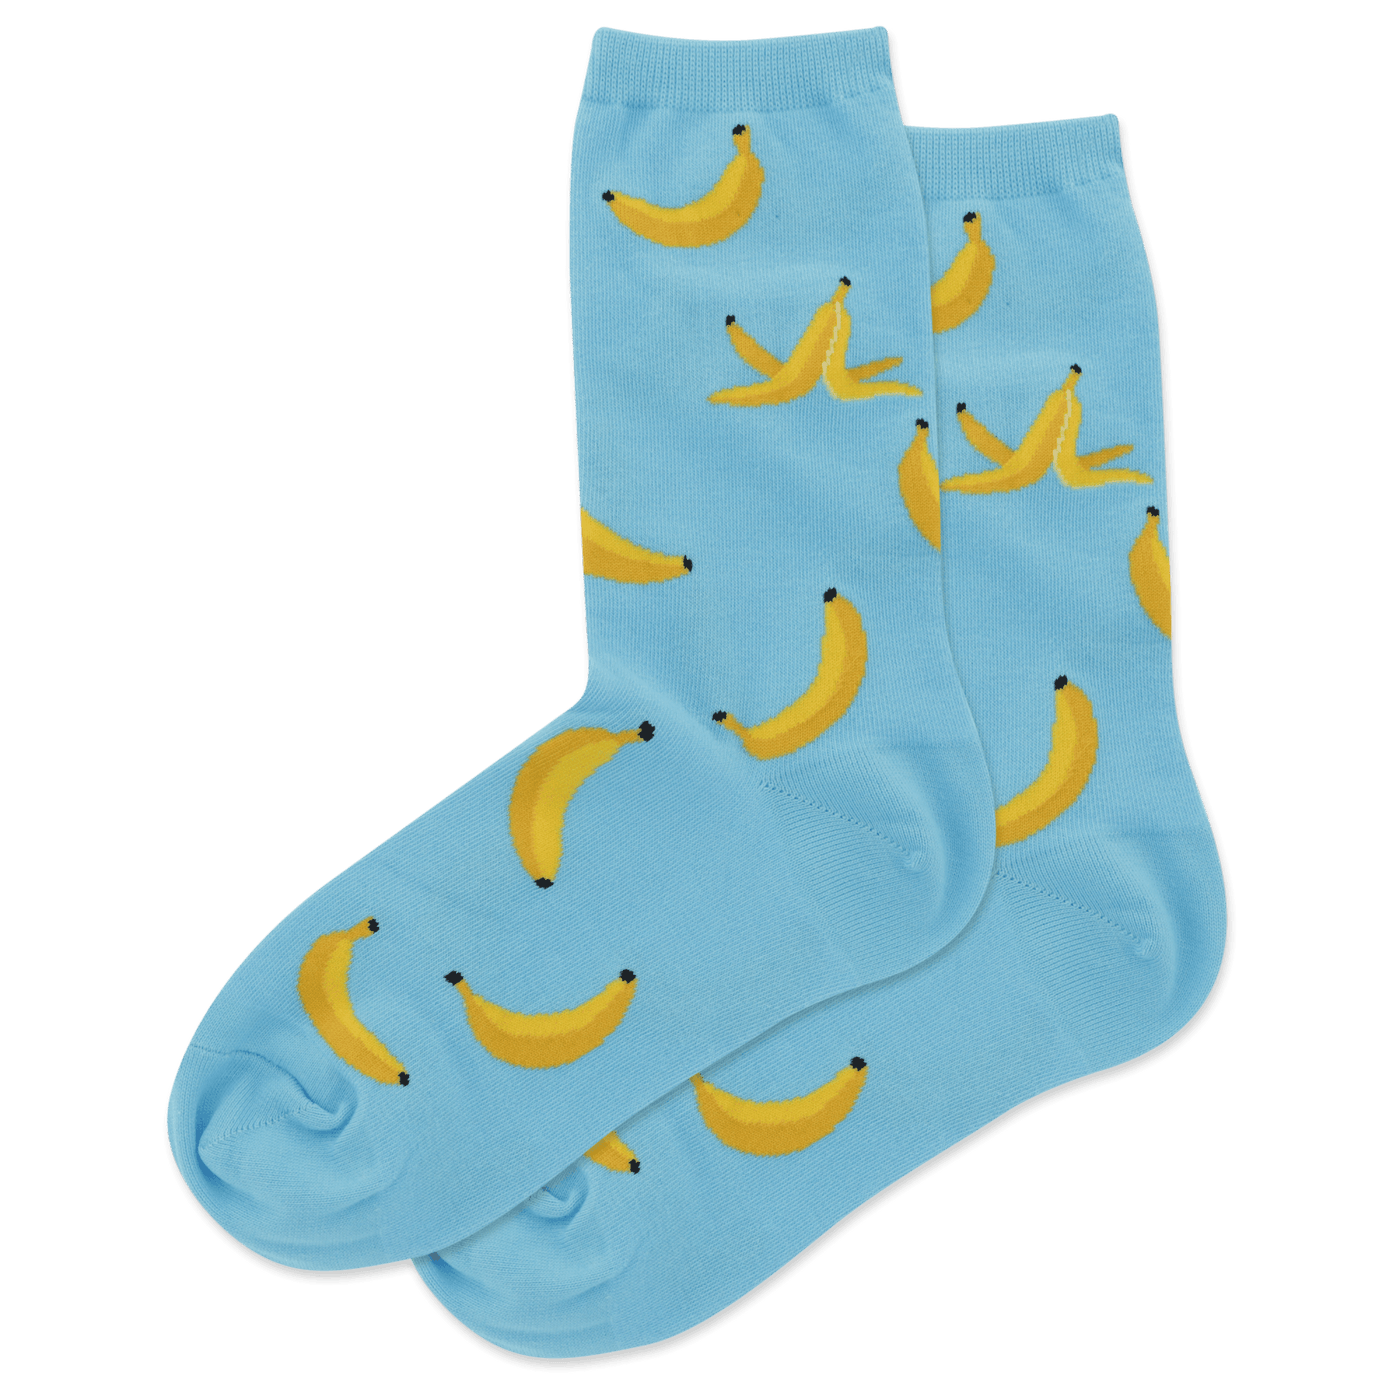 "Banana Peels" Cotton Crew Socks by Hot Sox - Medium